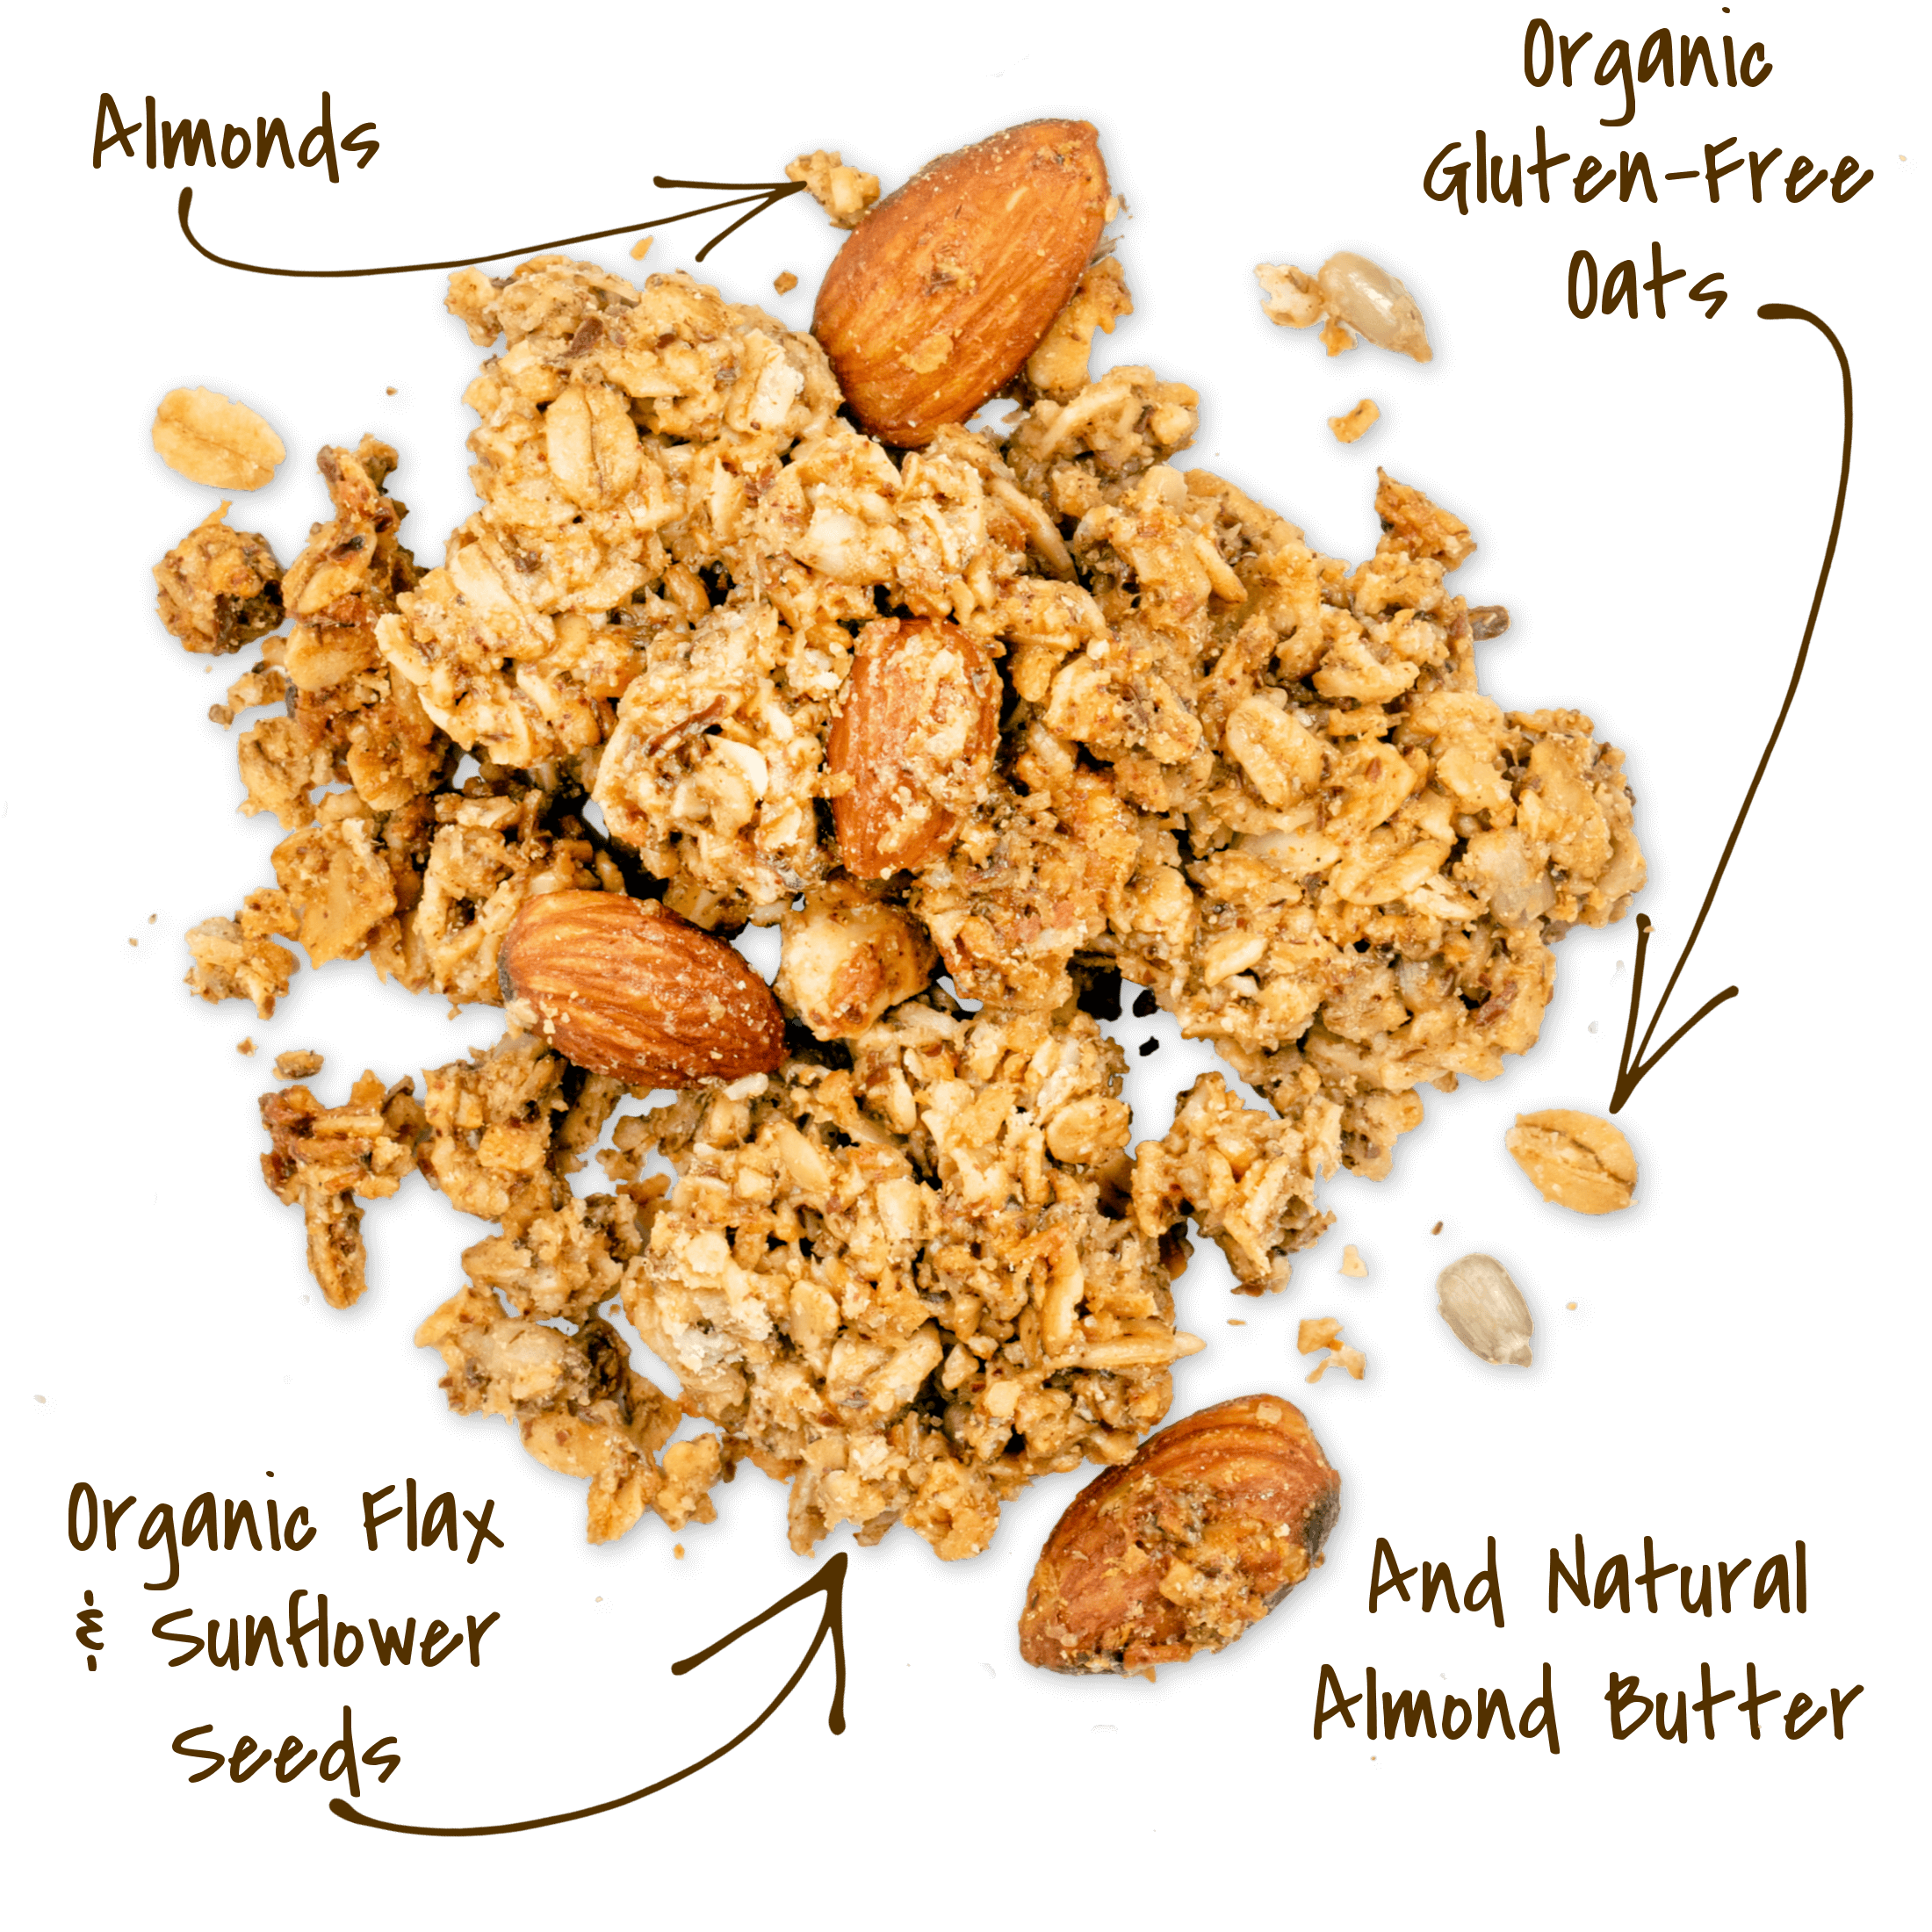 Michele's Almond Butter Granola clusters